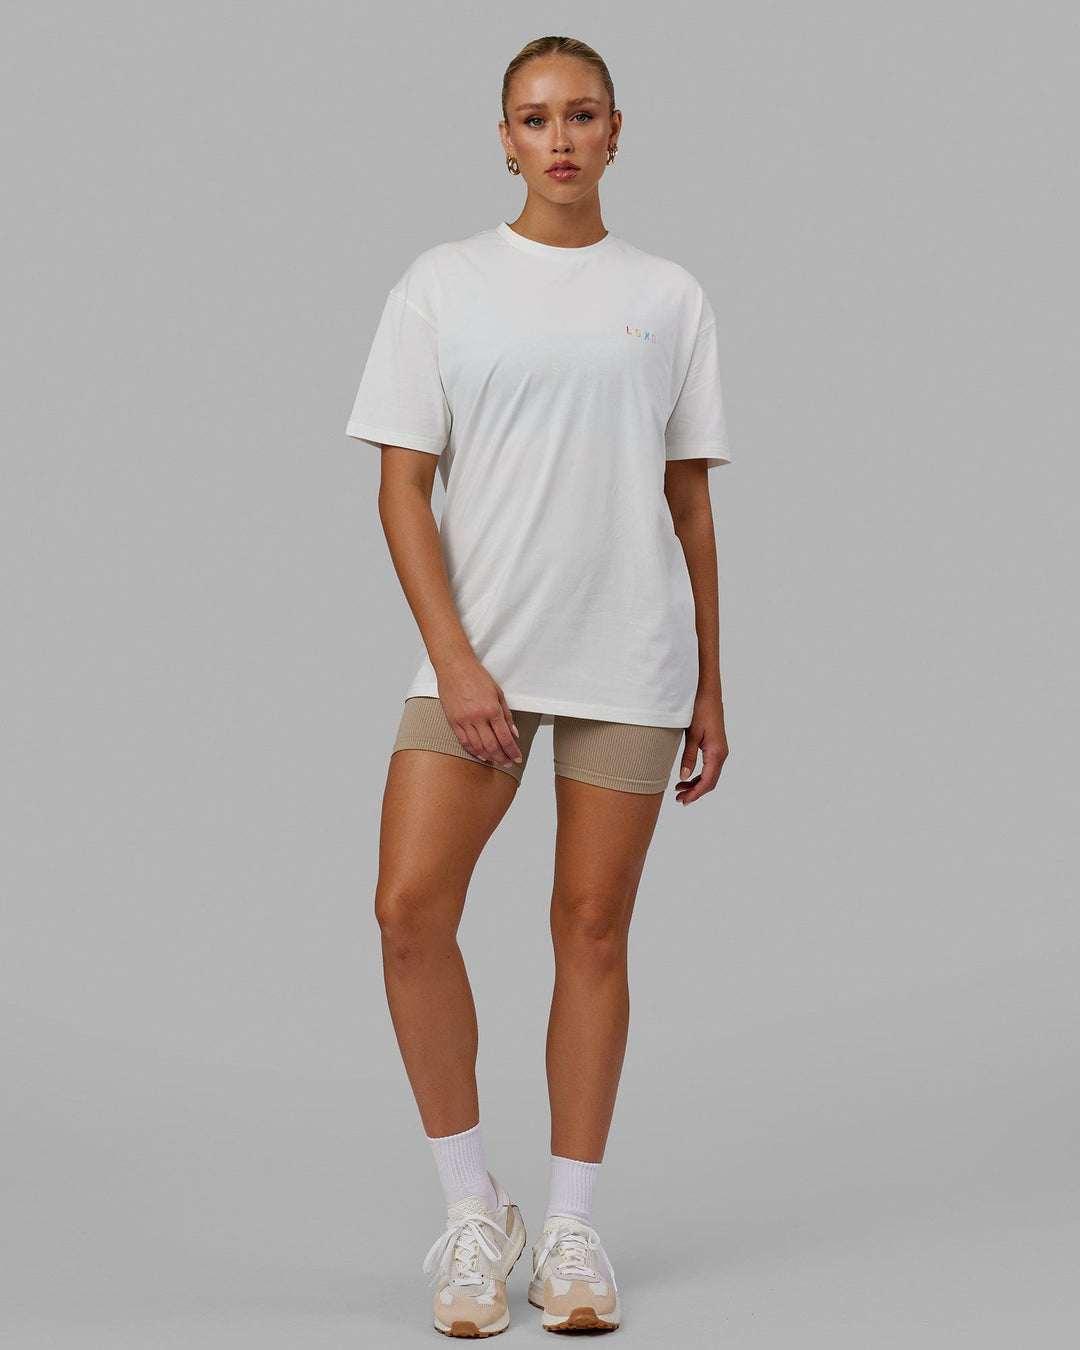 Woman wearing Unisex Amplify FLXCotton Tee Oversize - Off White